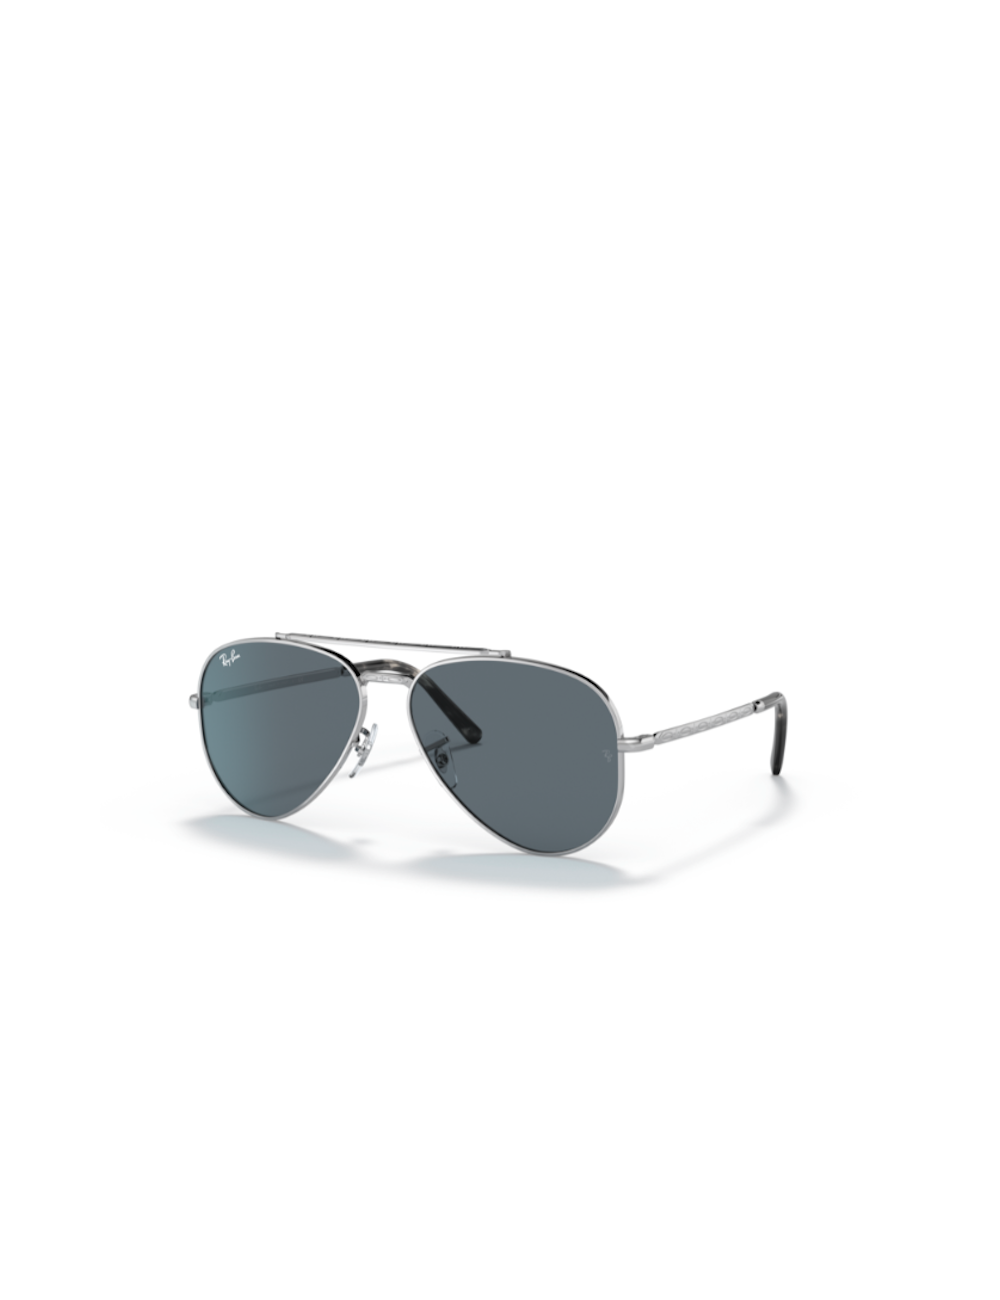 Ray Ban New Aviator RB3625 003/R5 unisex sunglasses – Ottica Mauro